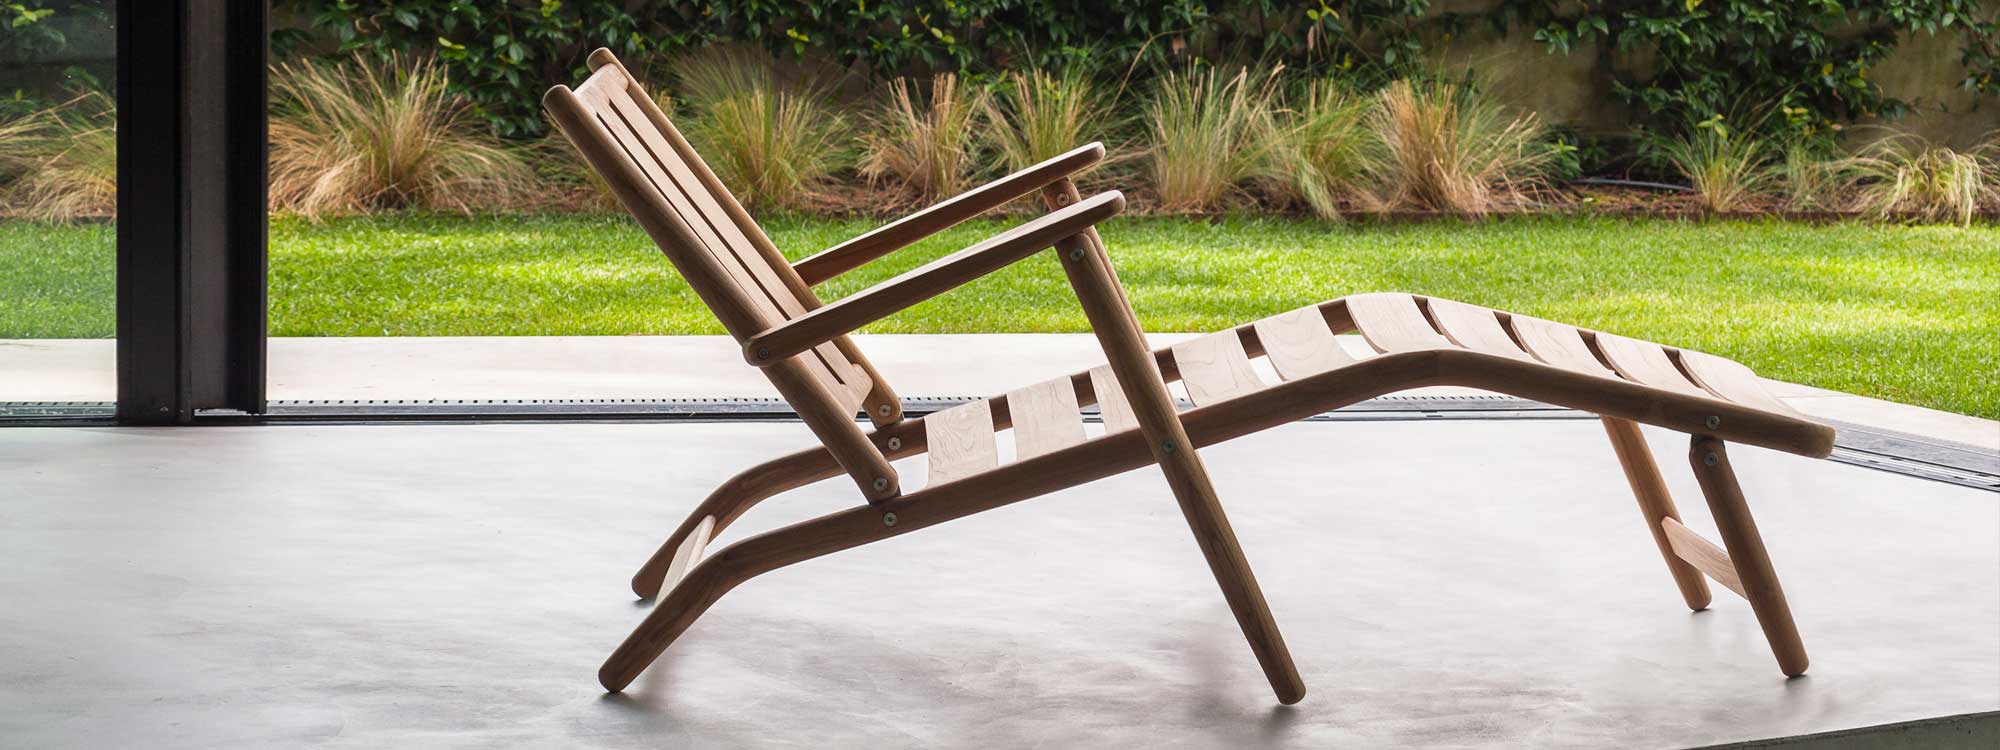 Levante is a modern teak steamer chair & folding garden lounge chair in all weather furniture materials by Roda luxury garden furniture.